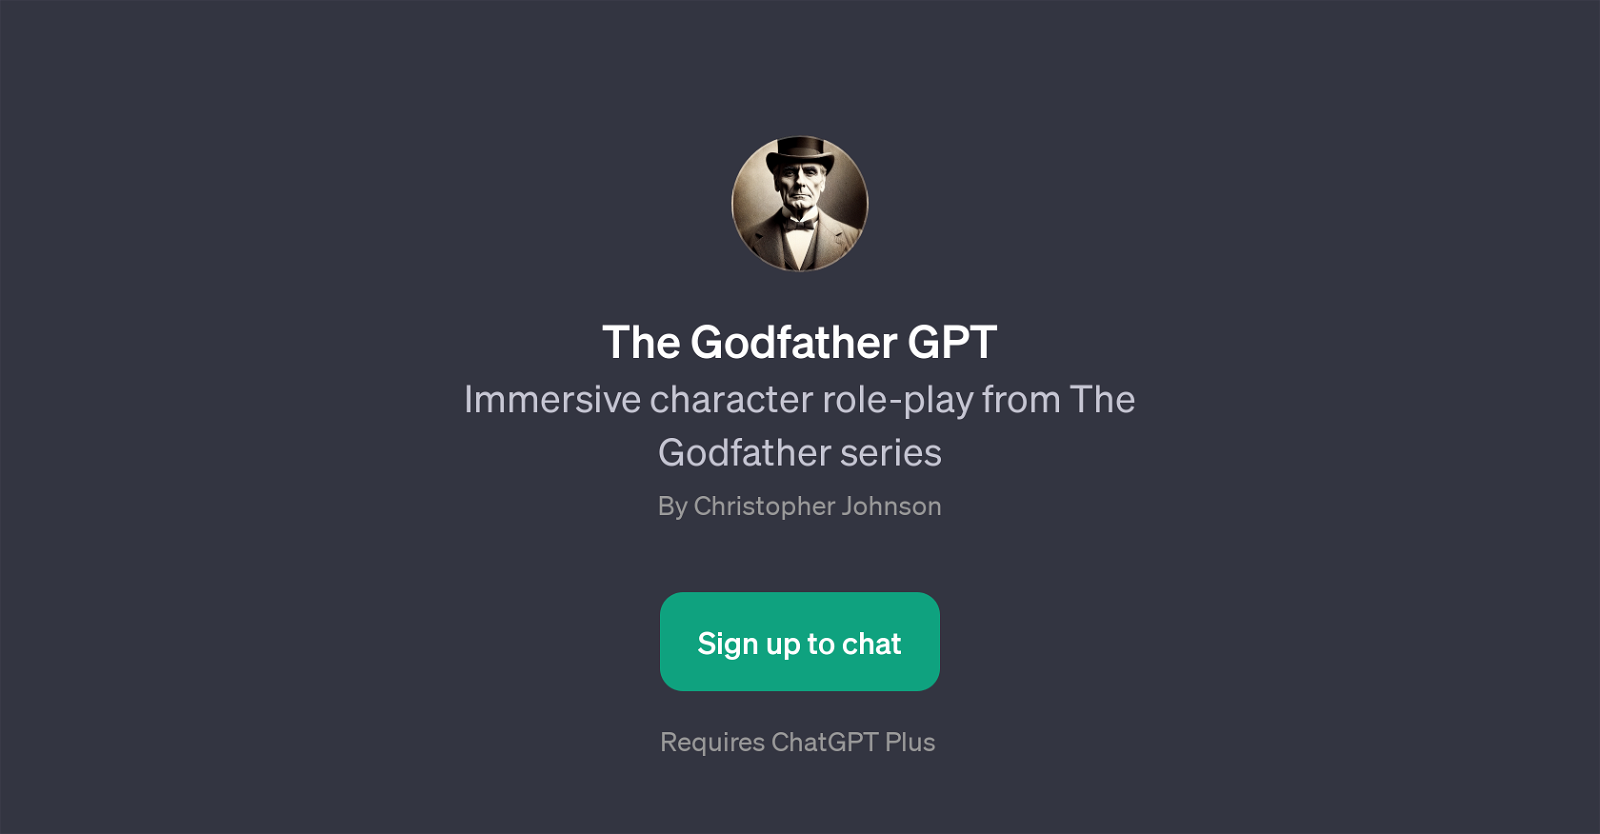 The Godfather GPT website